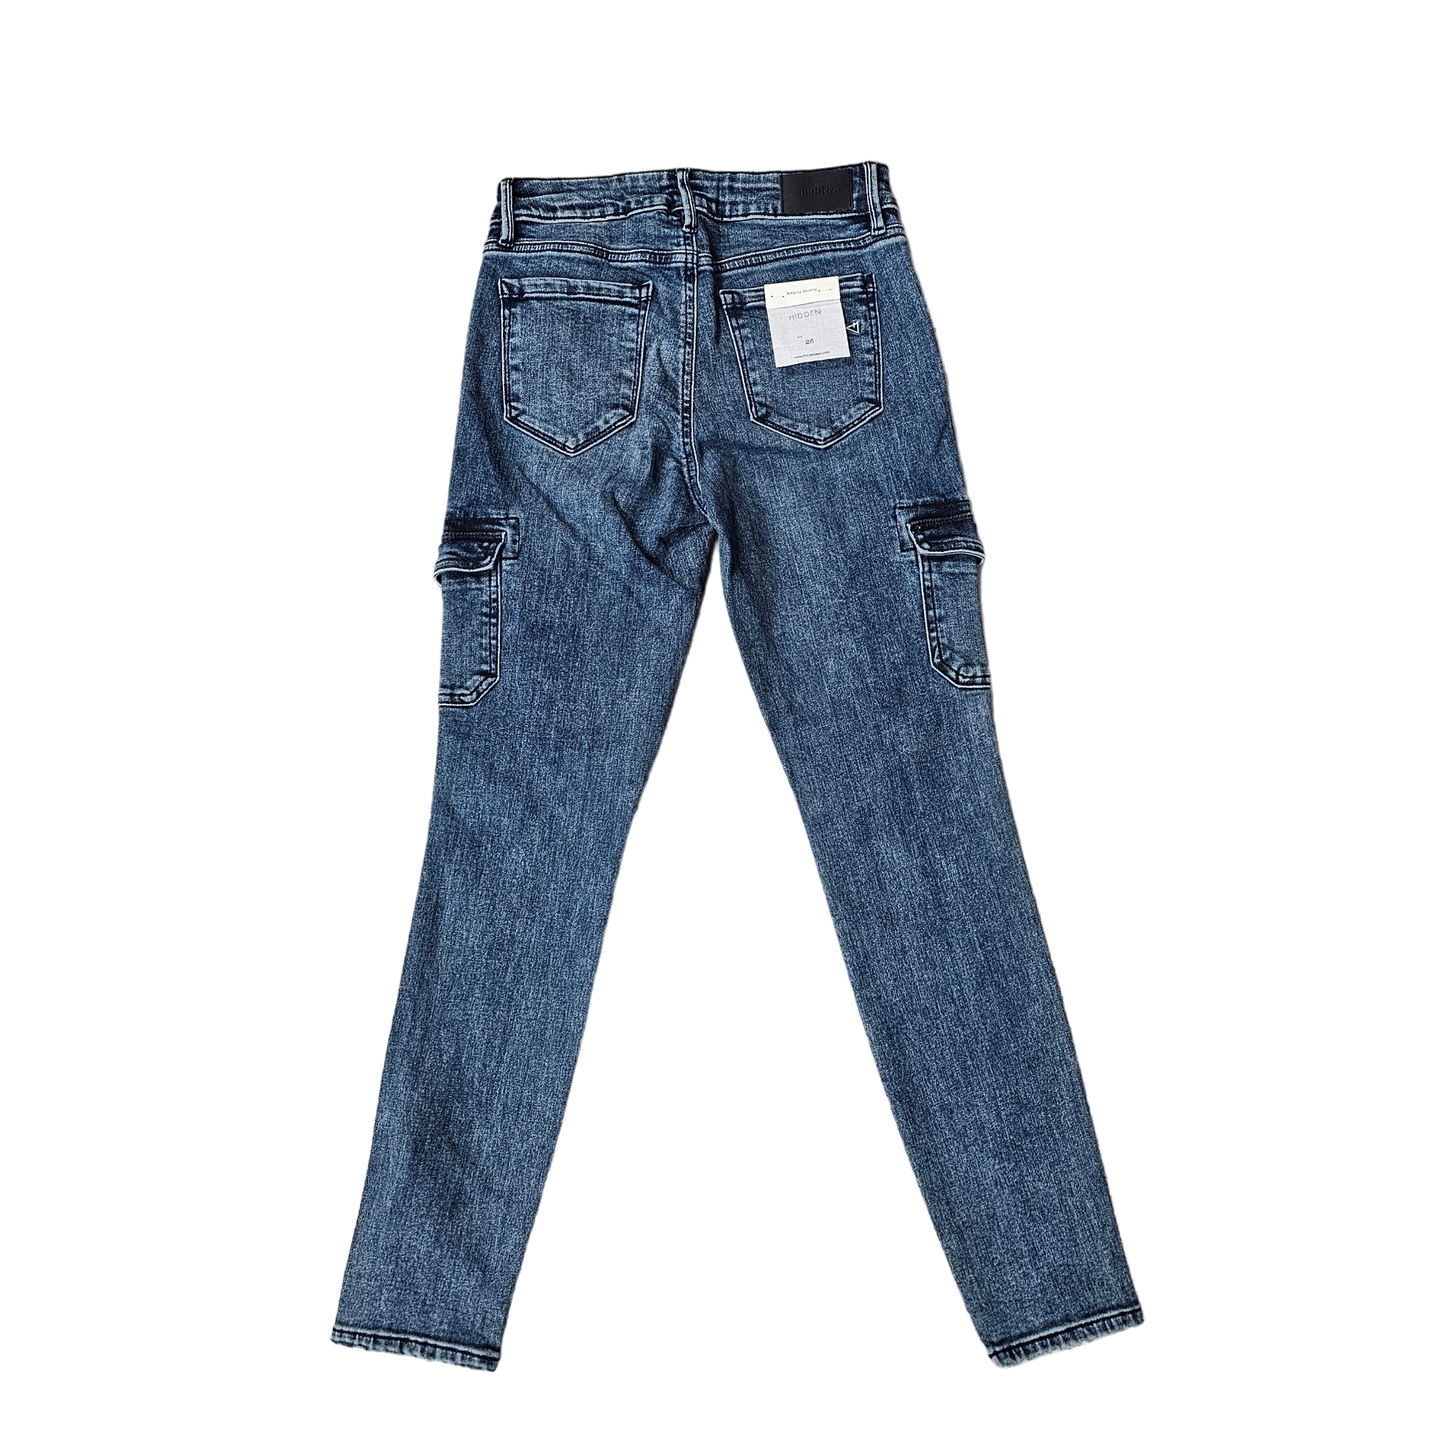 Jeans Skinny By Cmc  Size: 26